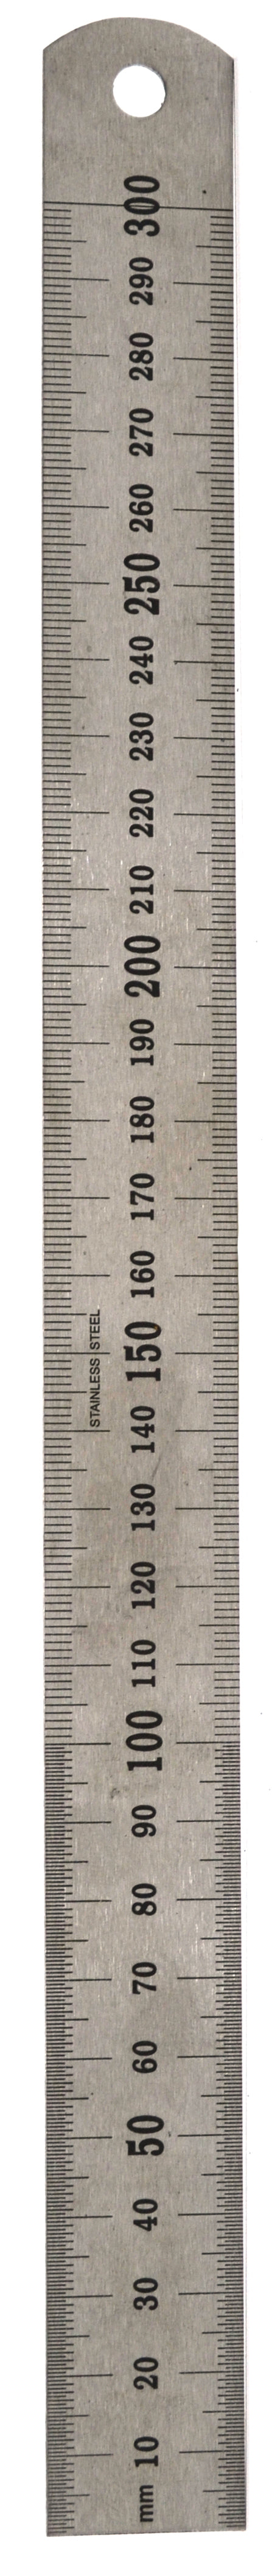 Wooden Ruler - Measurement - Lab Supplies